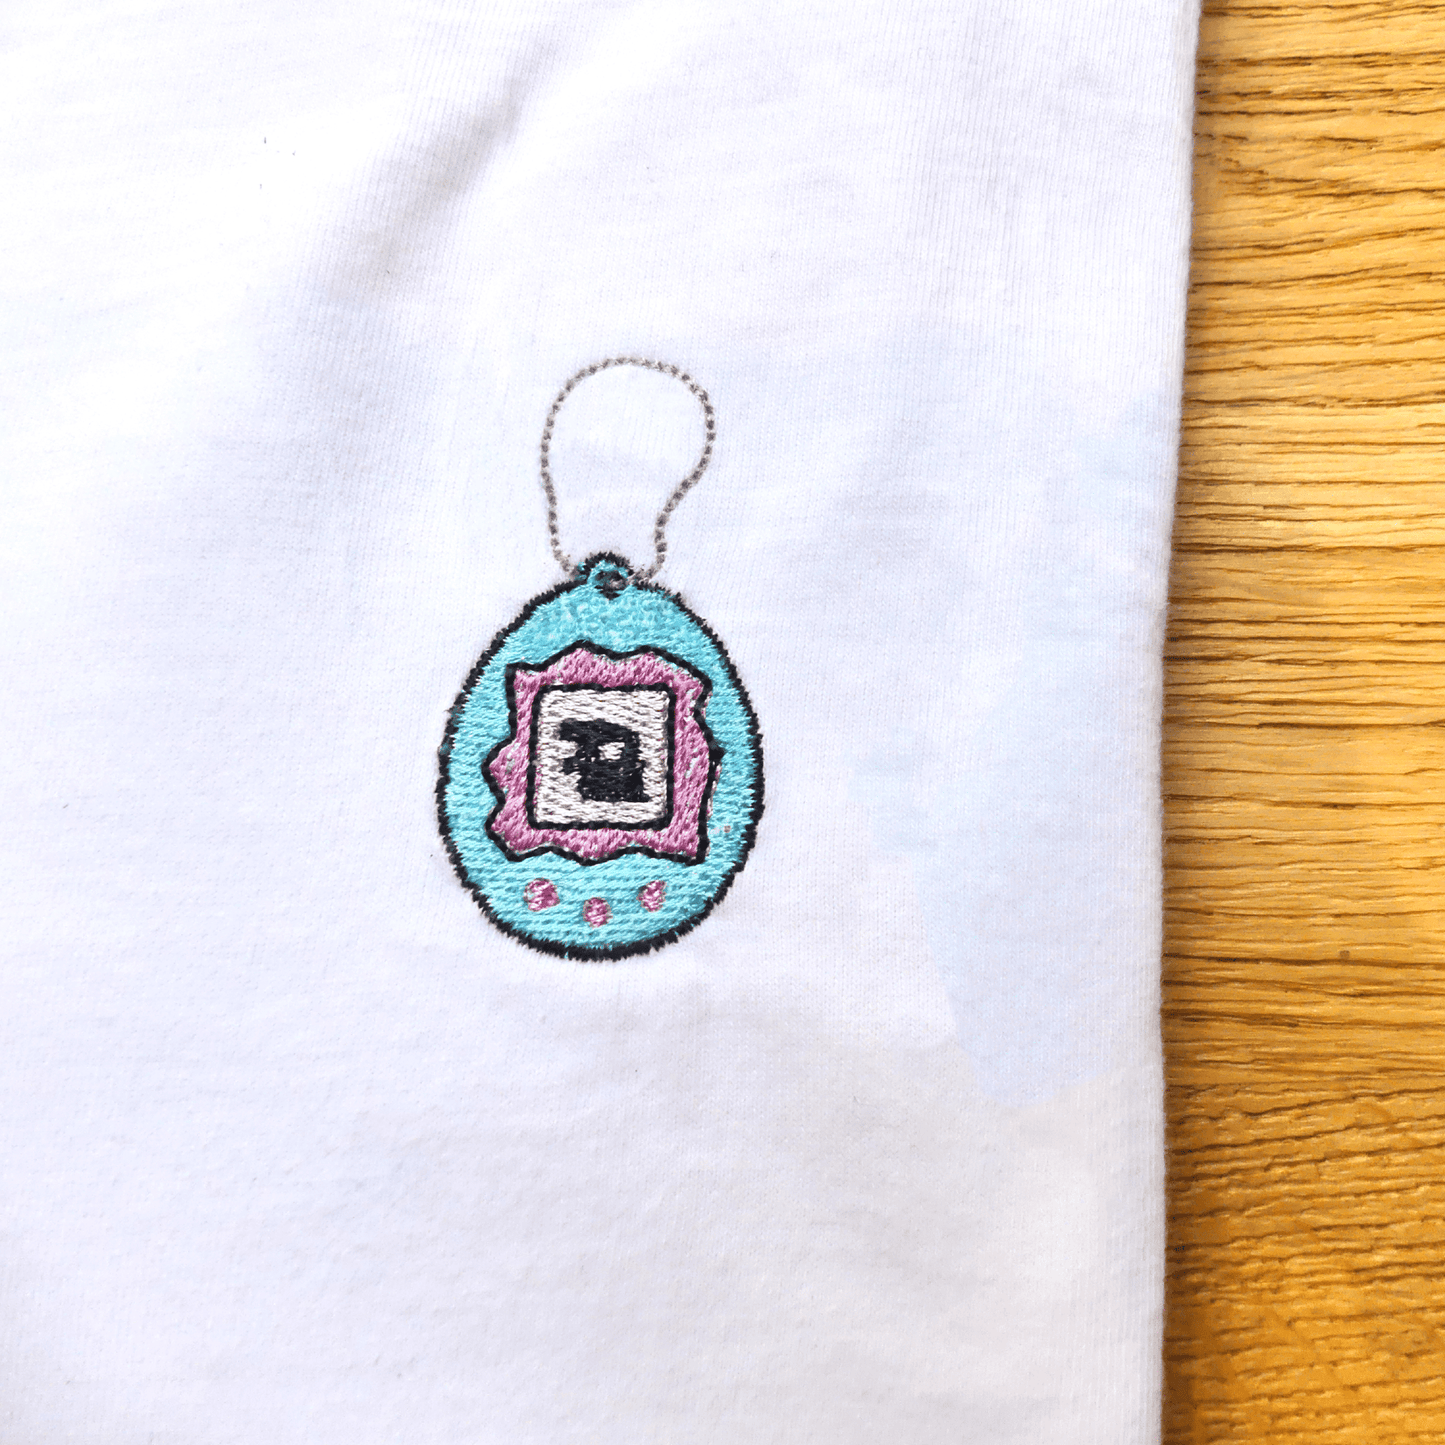 Tamagotchi Embroidered T-shirt